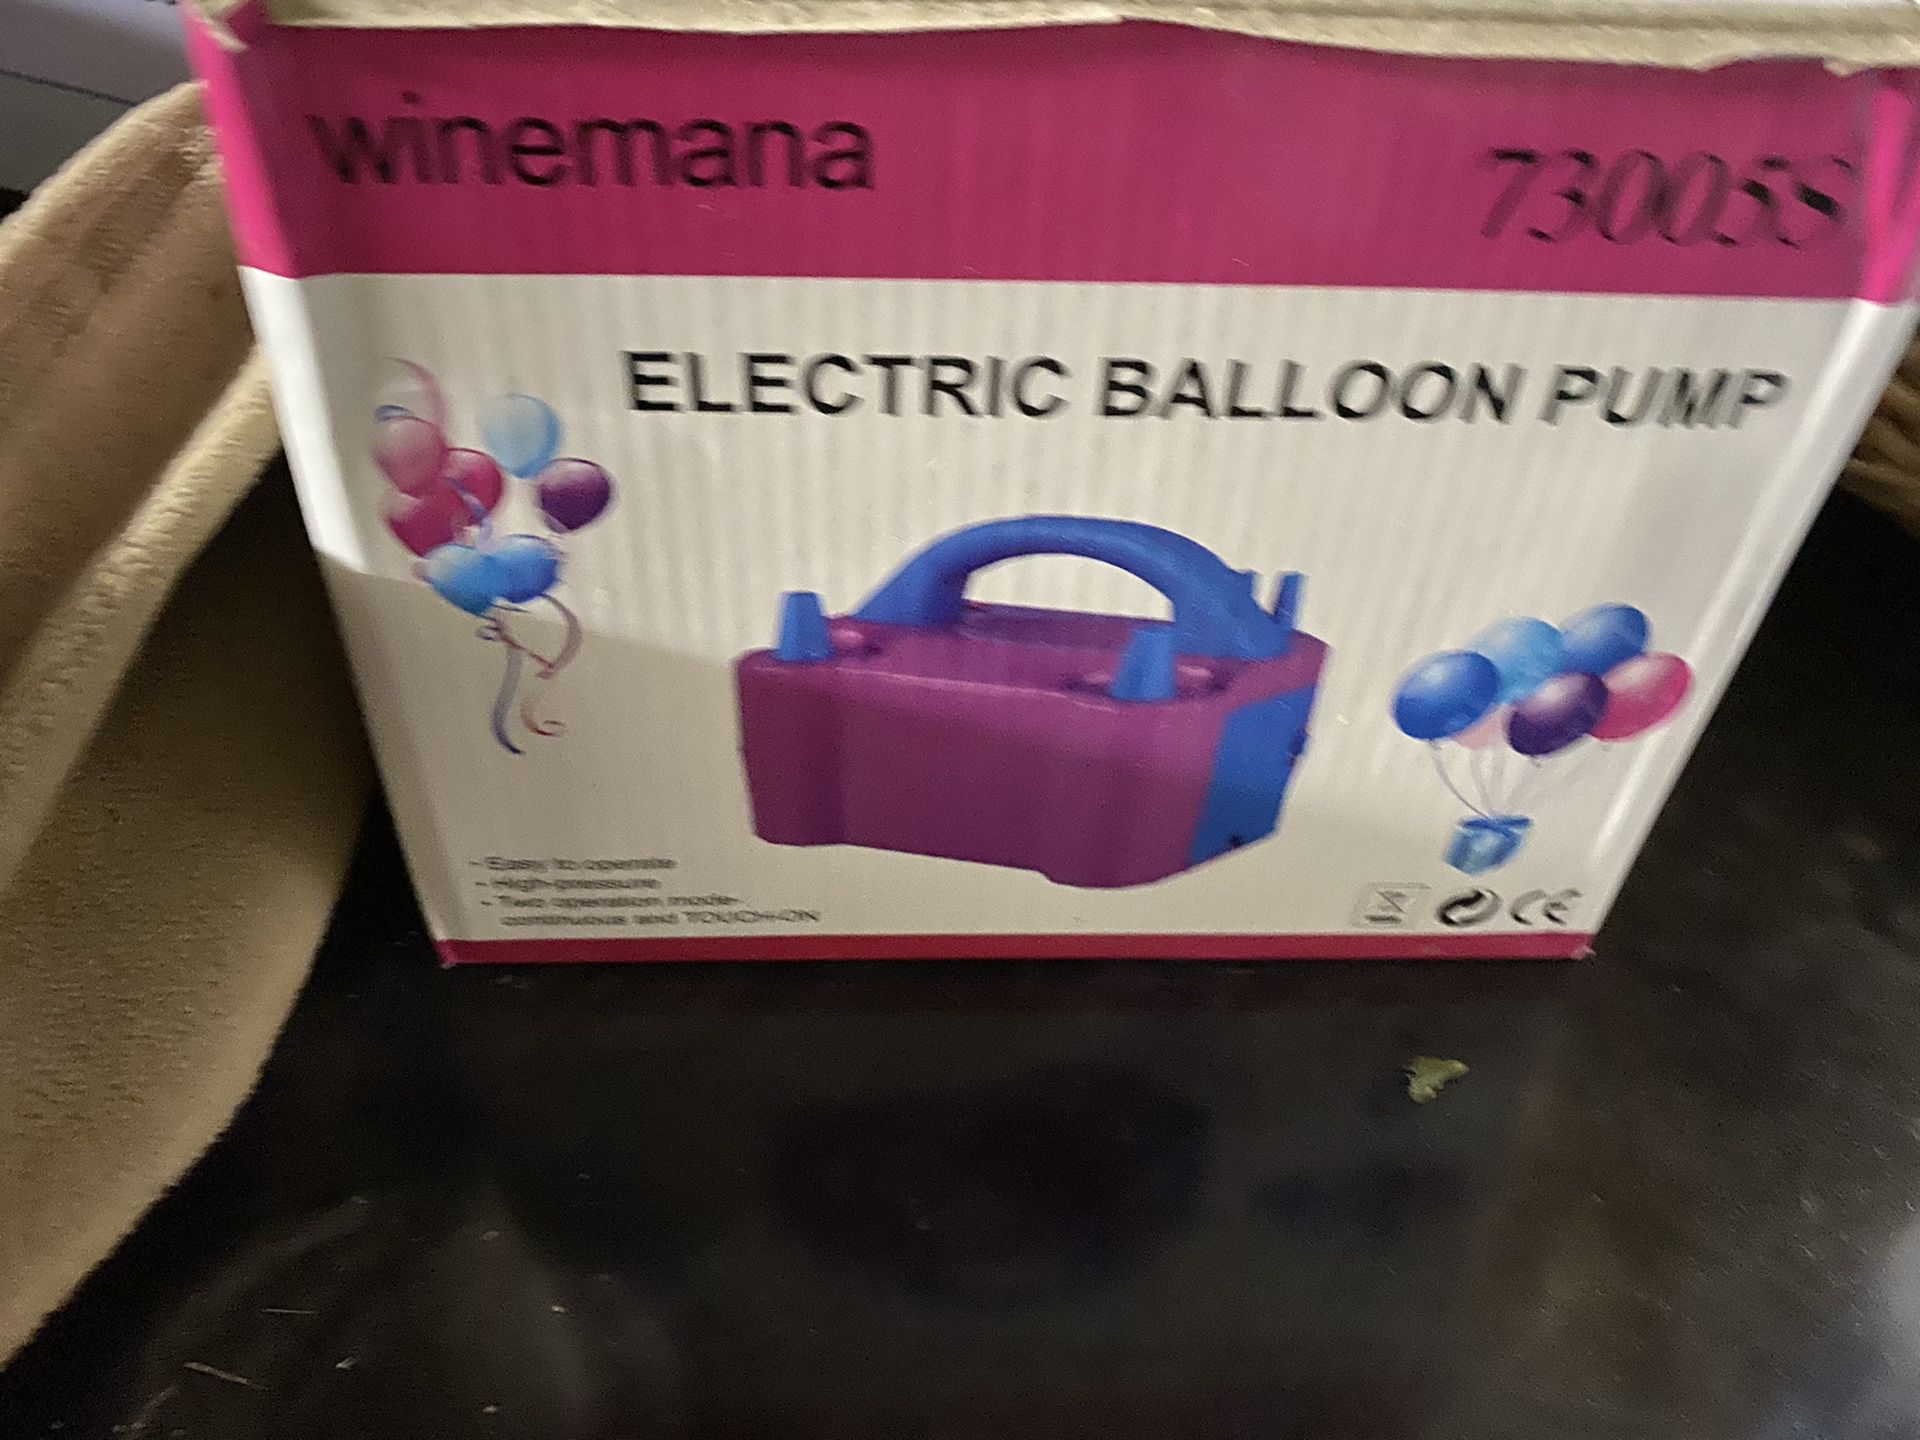 Electric balloons pump